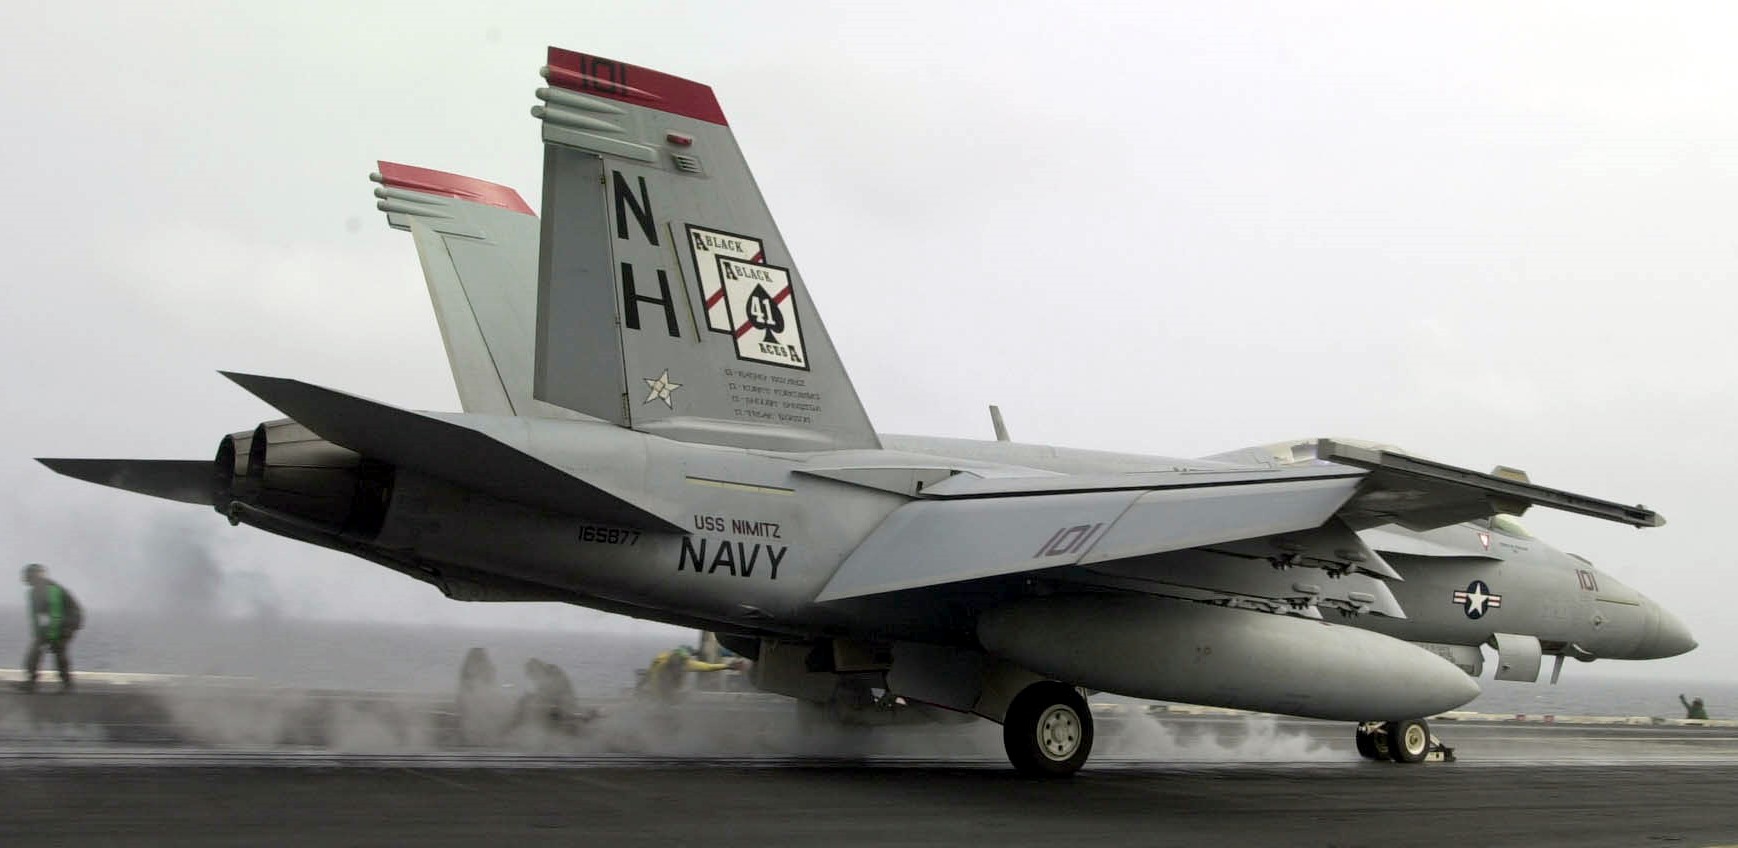 vfa-41 black aces strike fighter squadron f/a-18f super hornet cvw-11 cvn-68 uss nimitz us navy 183p